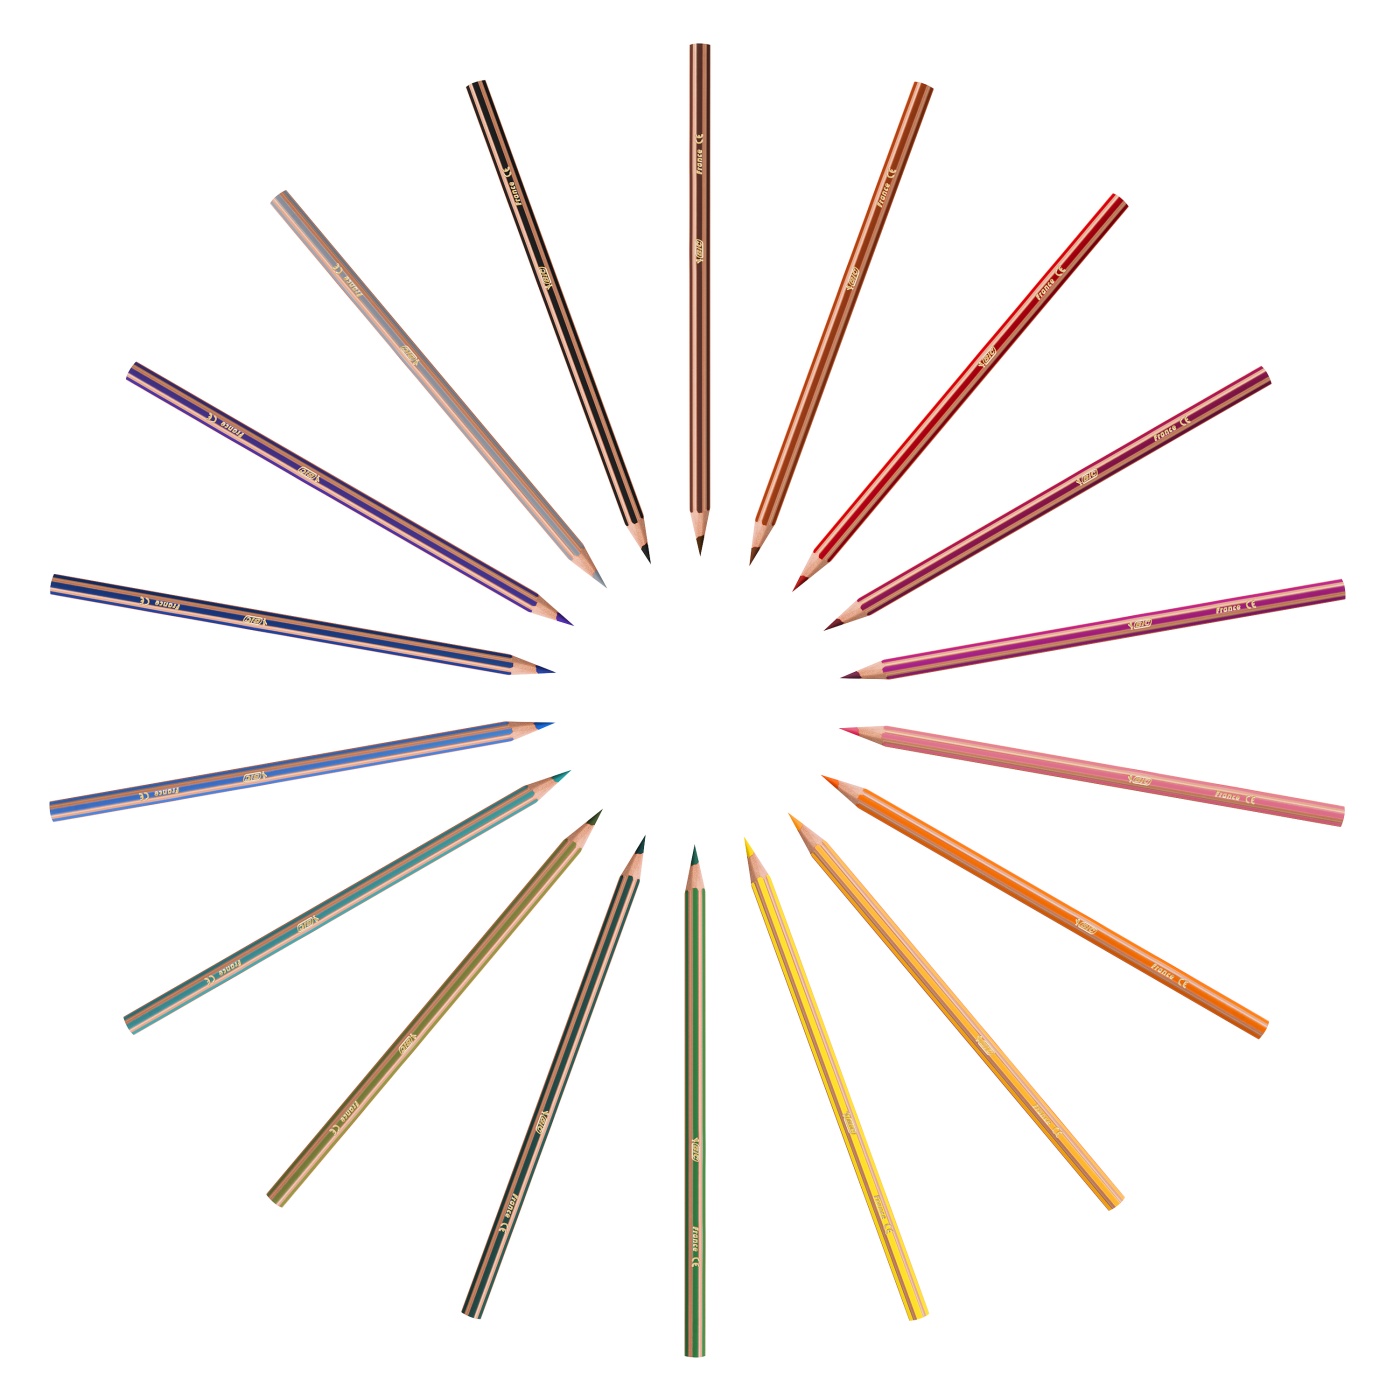 Kids Evolution Stripes Värikynät 24-setti (5 vuota+) ryhmässä Kids / Lastenkynät / Lasten värikynät @ Pen Store (100245)